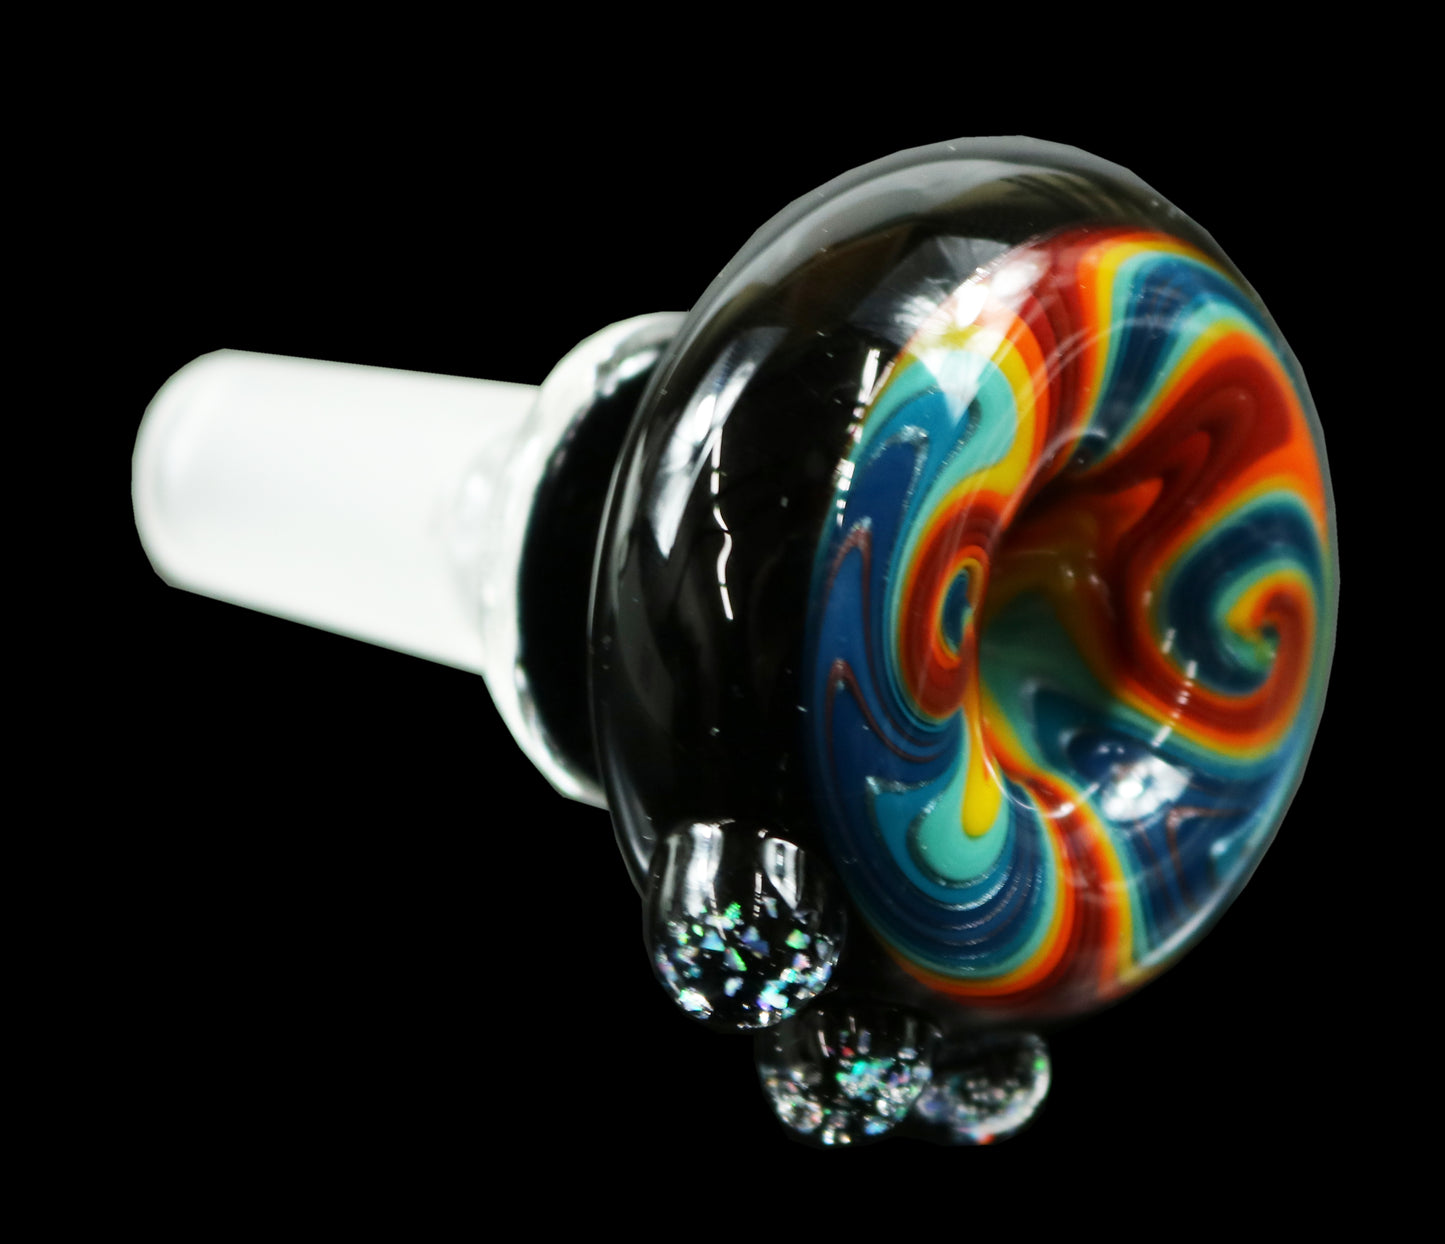 14mm Reversal Bowl Push Slide by Glass by Slick - Black/Rainbow/Reflective Glitter